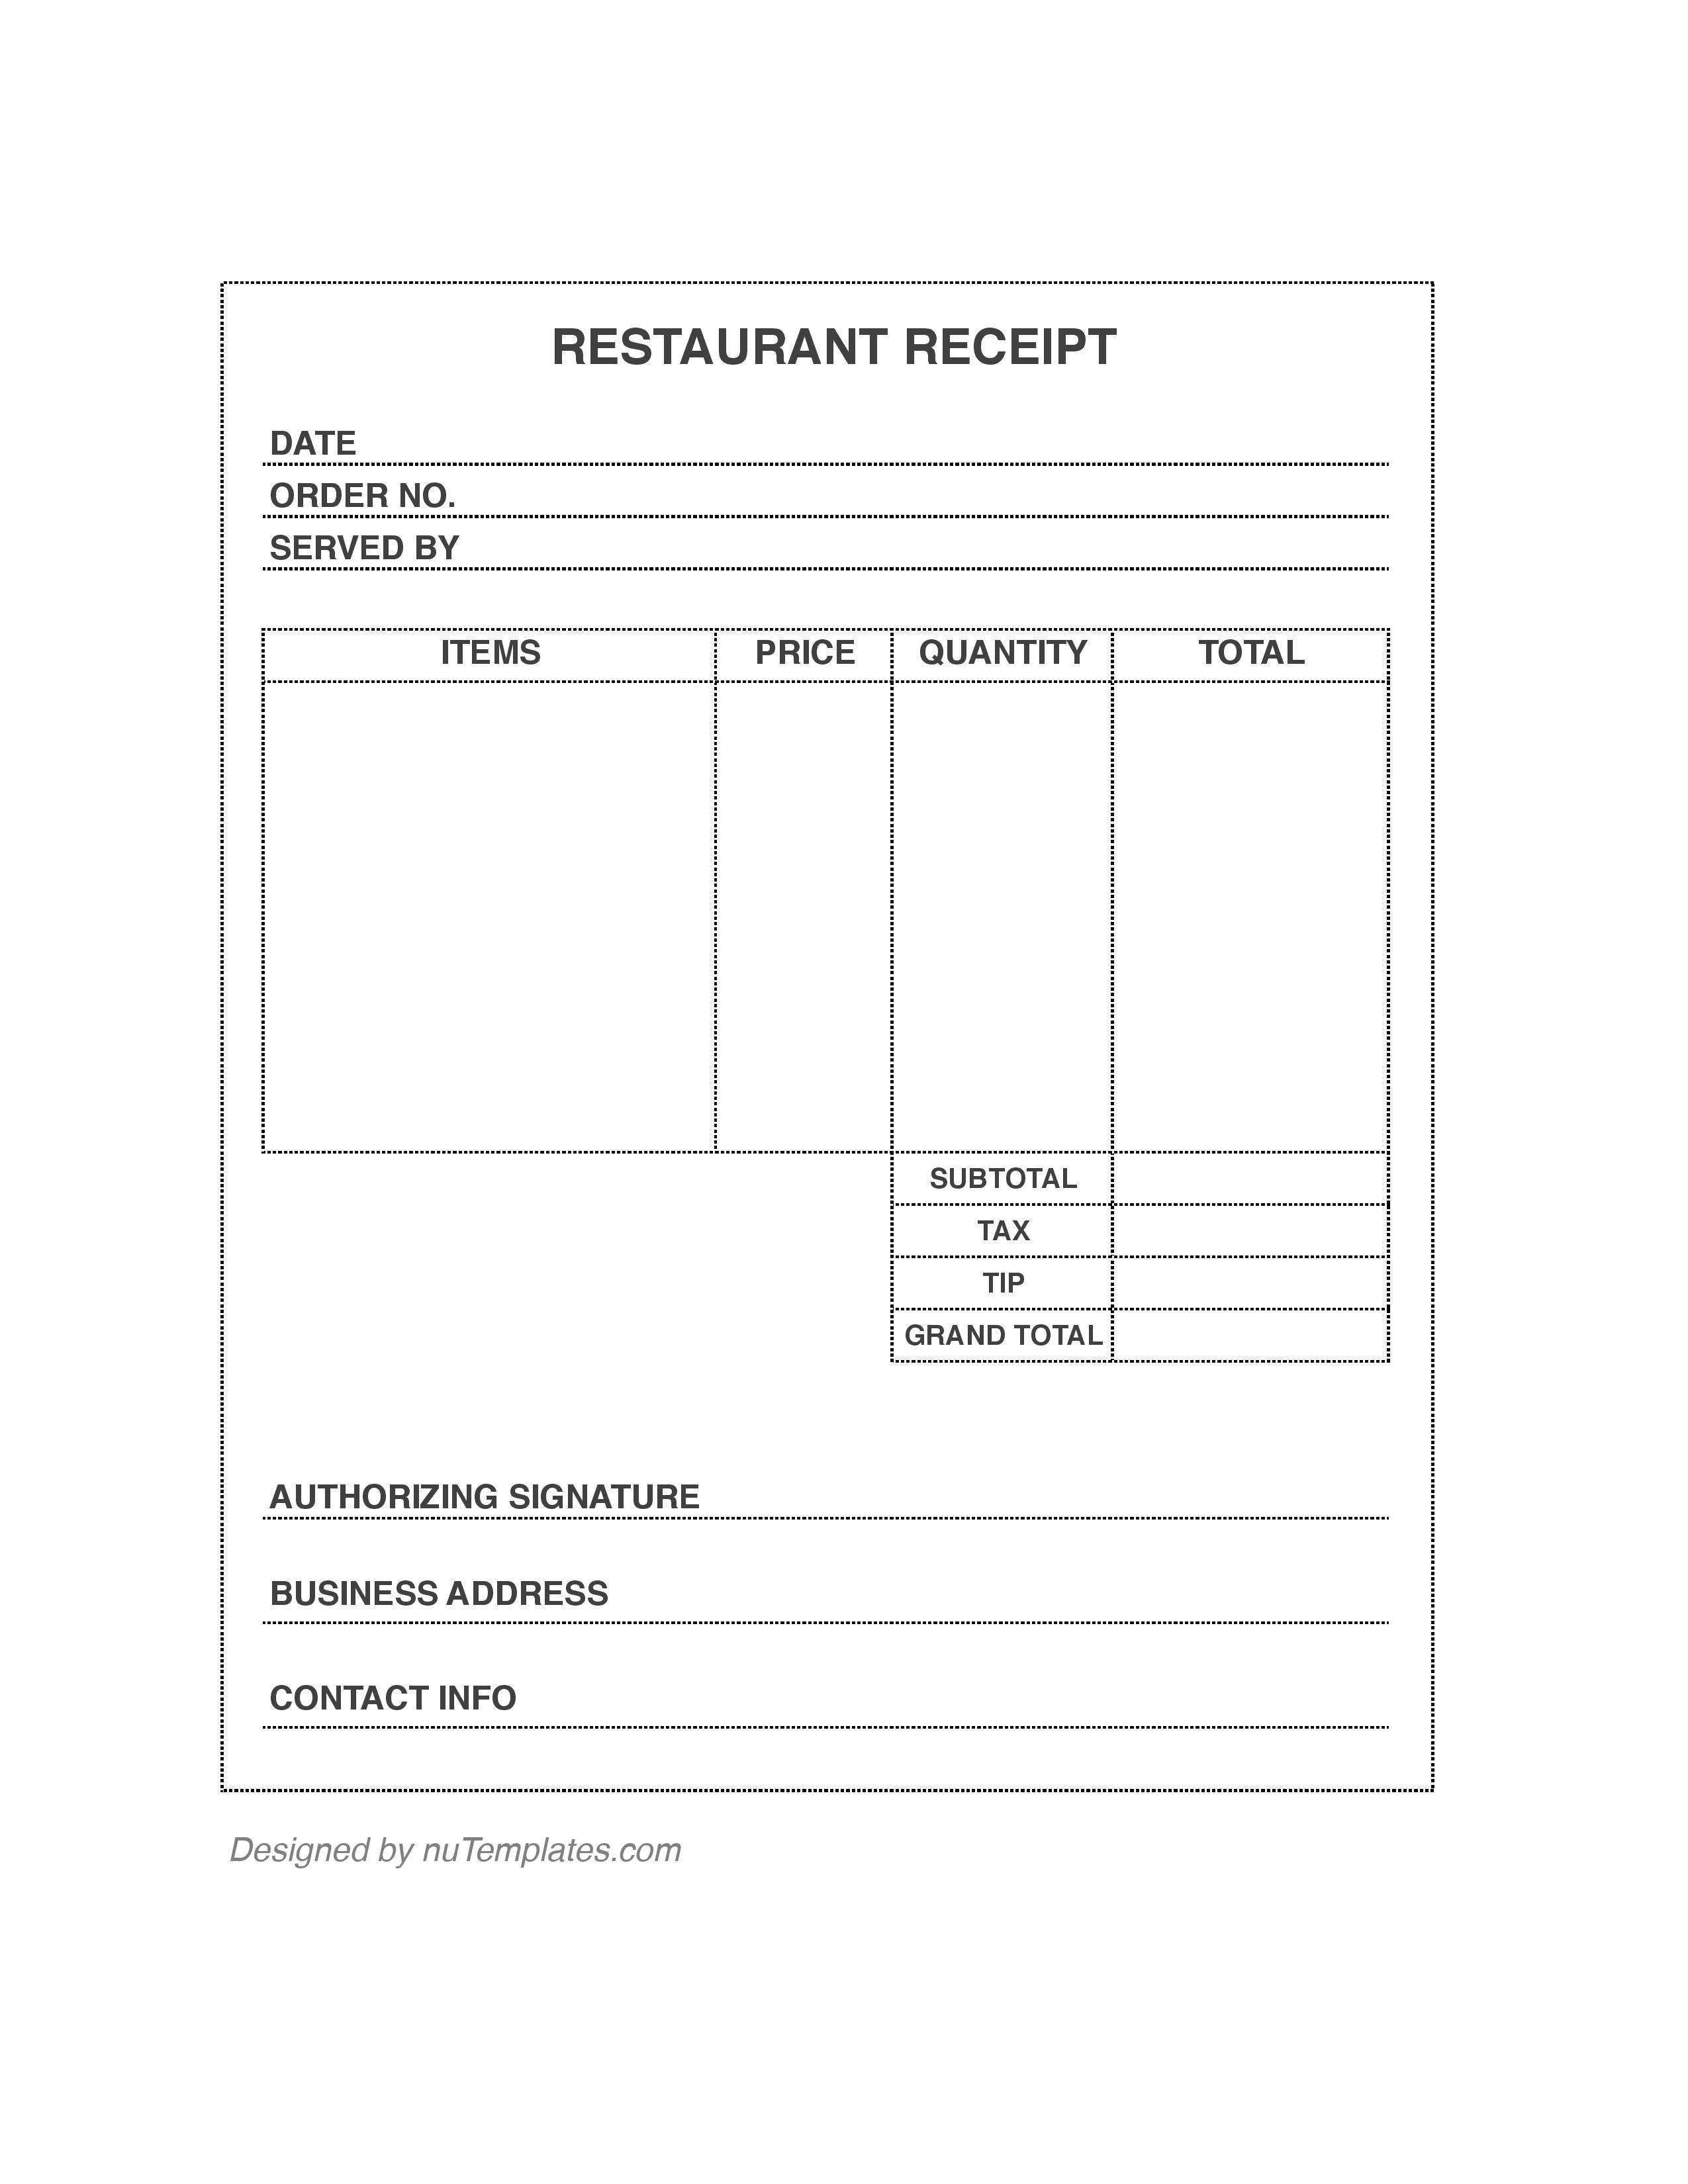 restaurant receipt sample